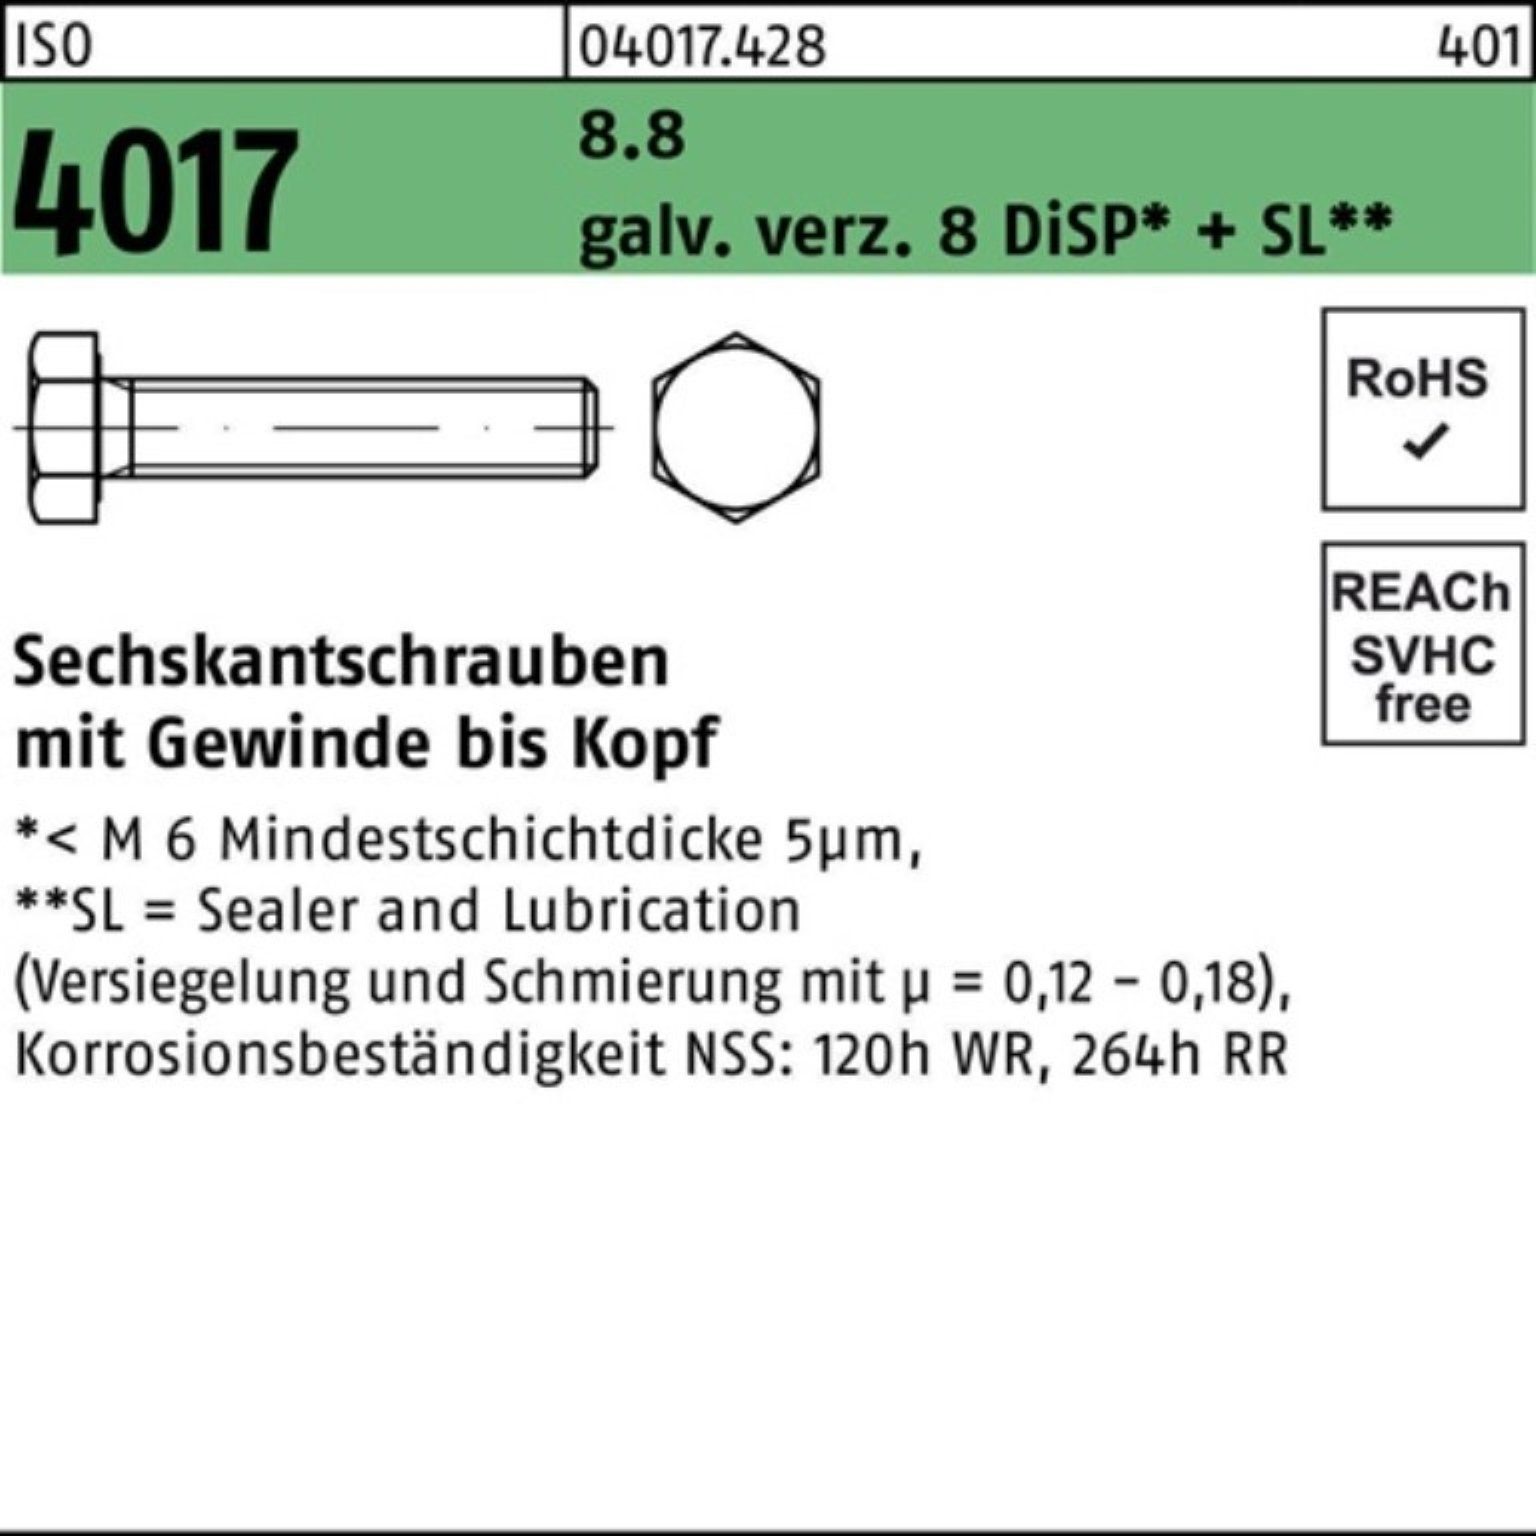 Bufab Sechskantschraube 100er DiS VG M12x galv.verz. Pack Sechskantschraube 8.8 ISO 8 120 4017